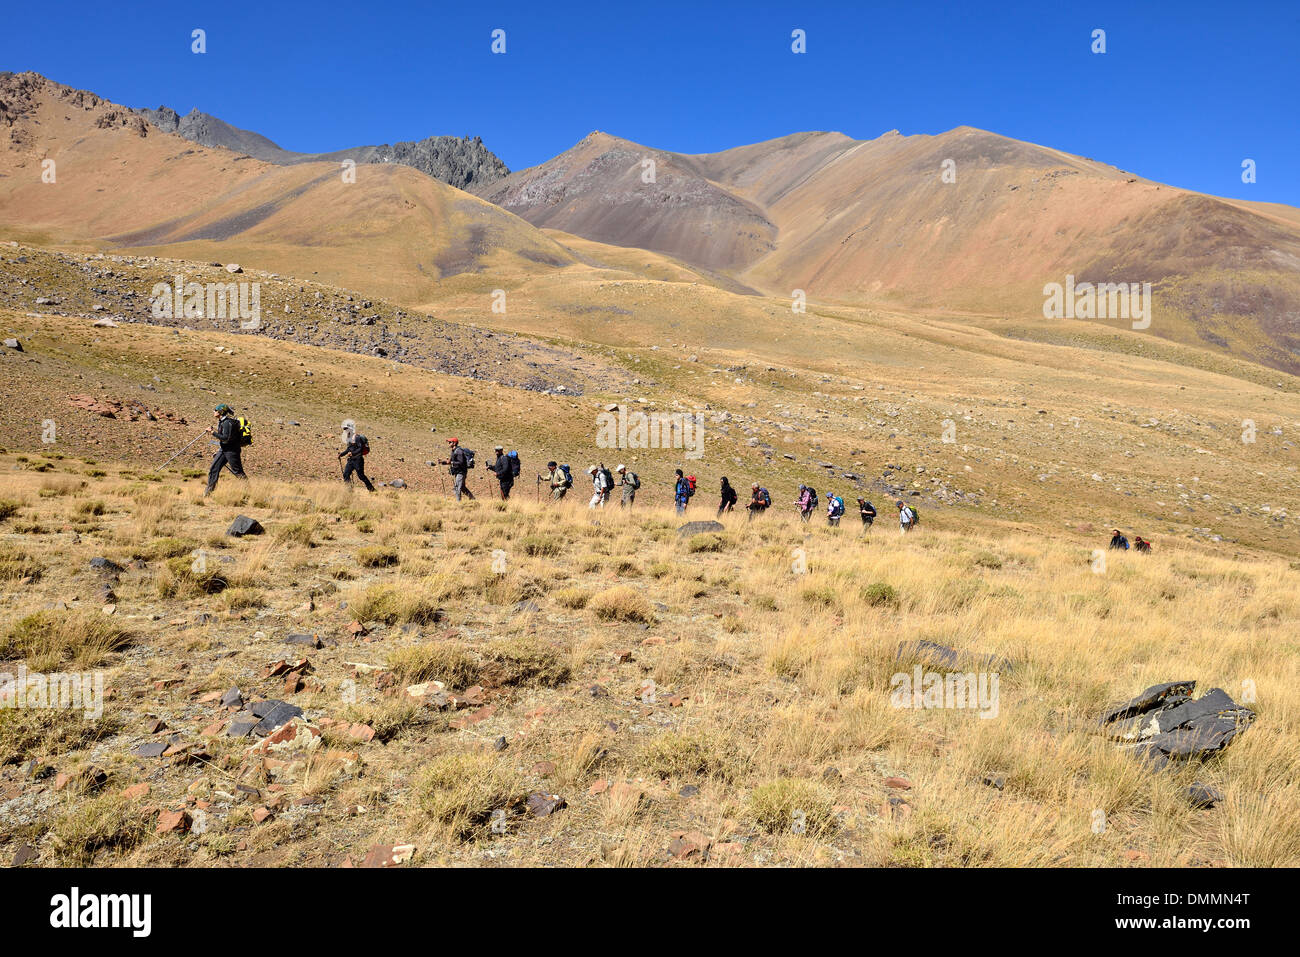 Iran, group of people hiking on Hezar Som plateau, Alam Kuh area, Alborz mountains Stock Photo